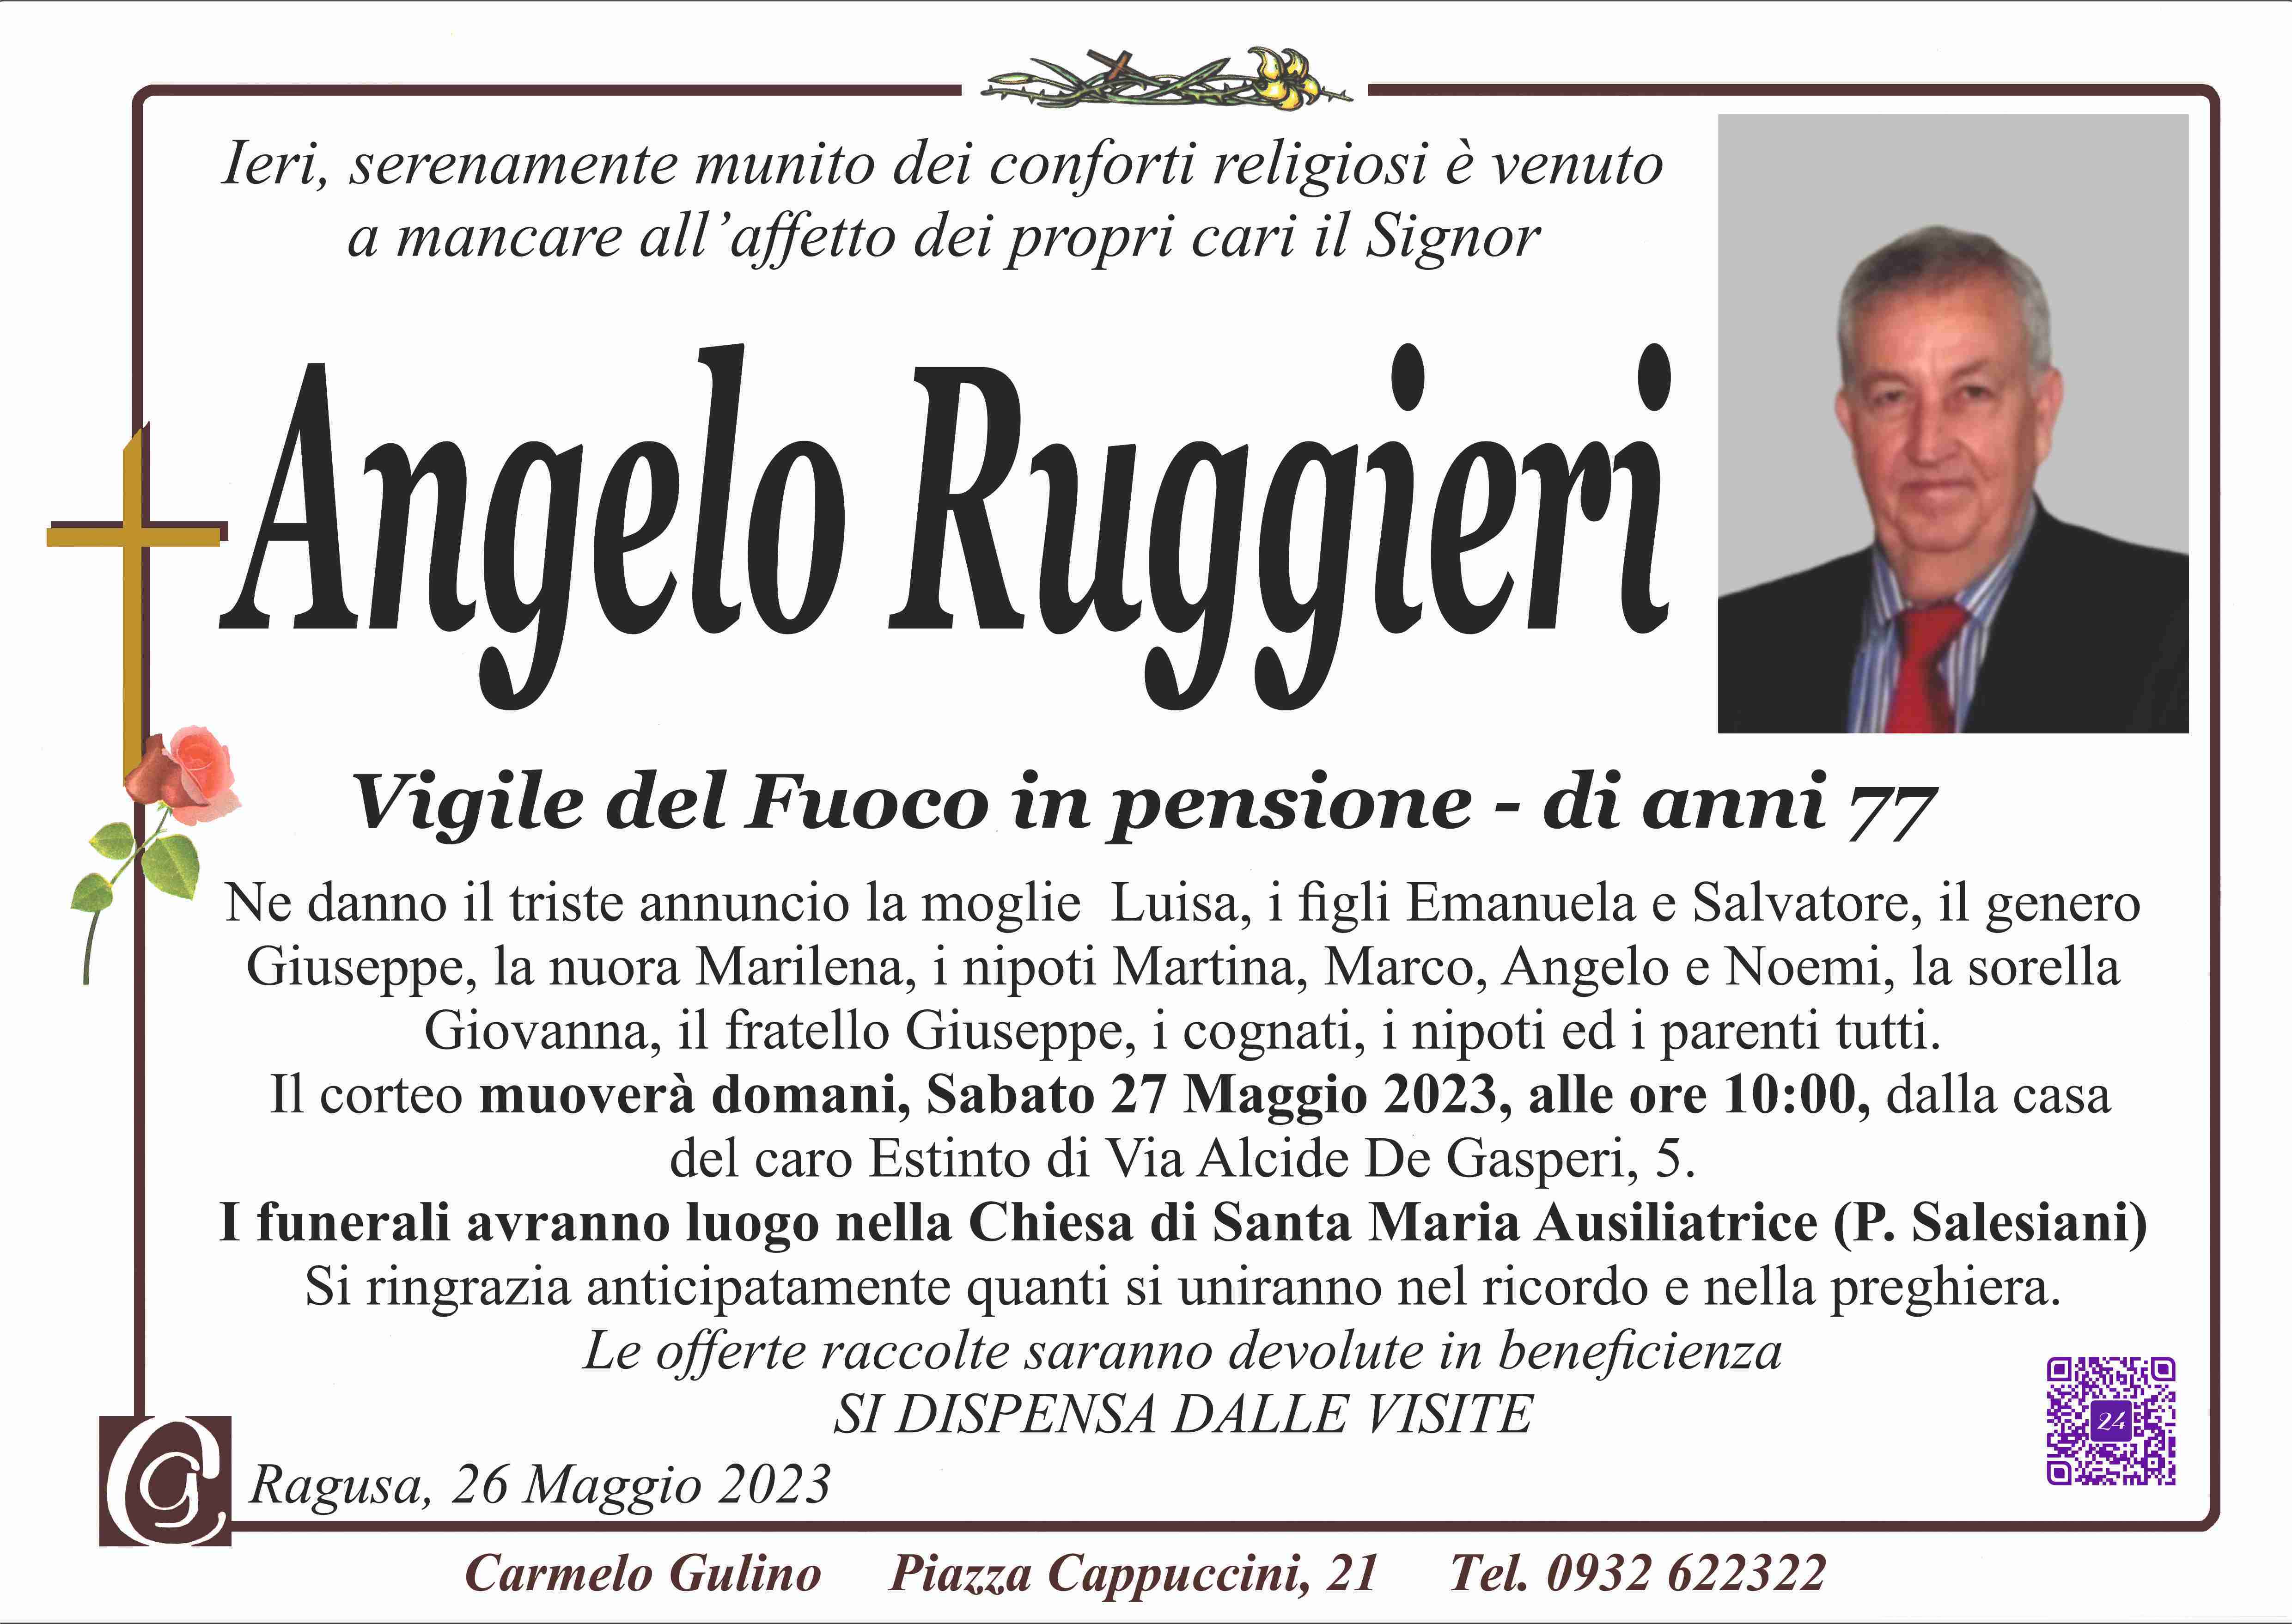 Angelo Ruggieri